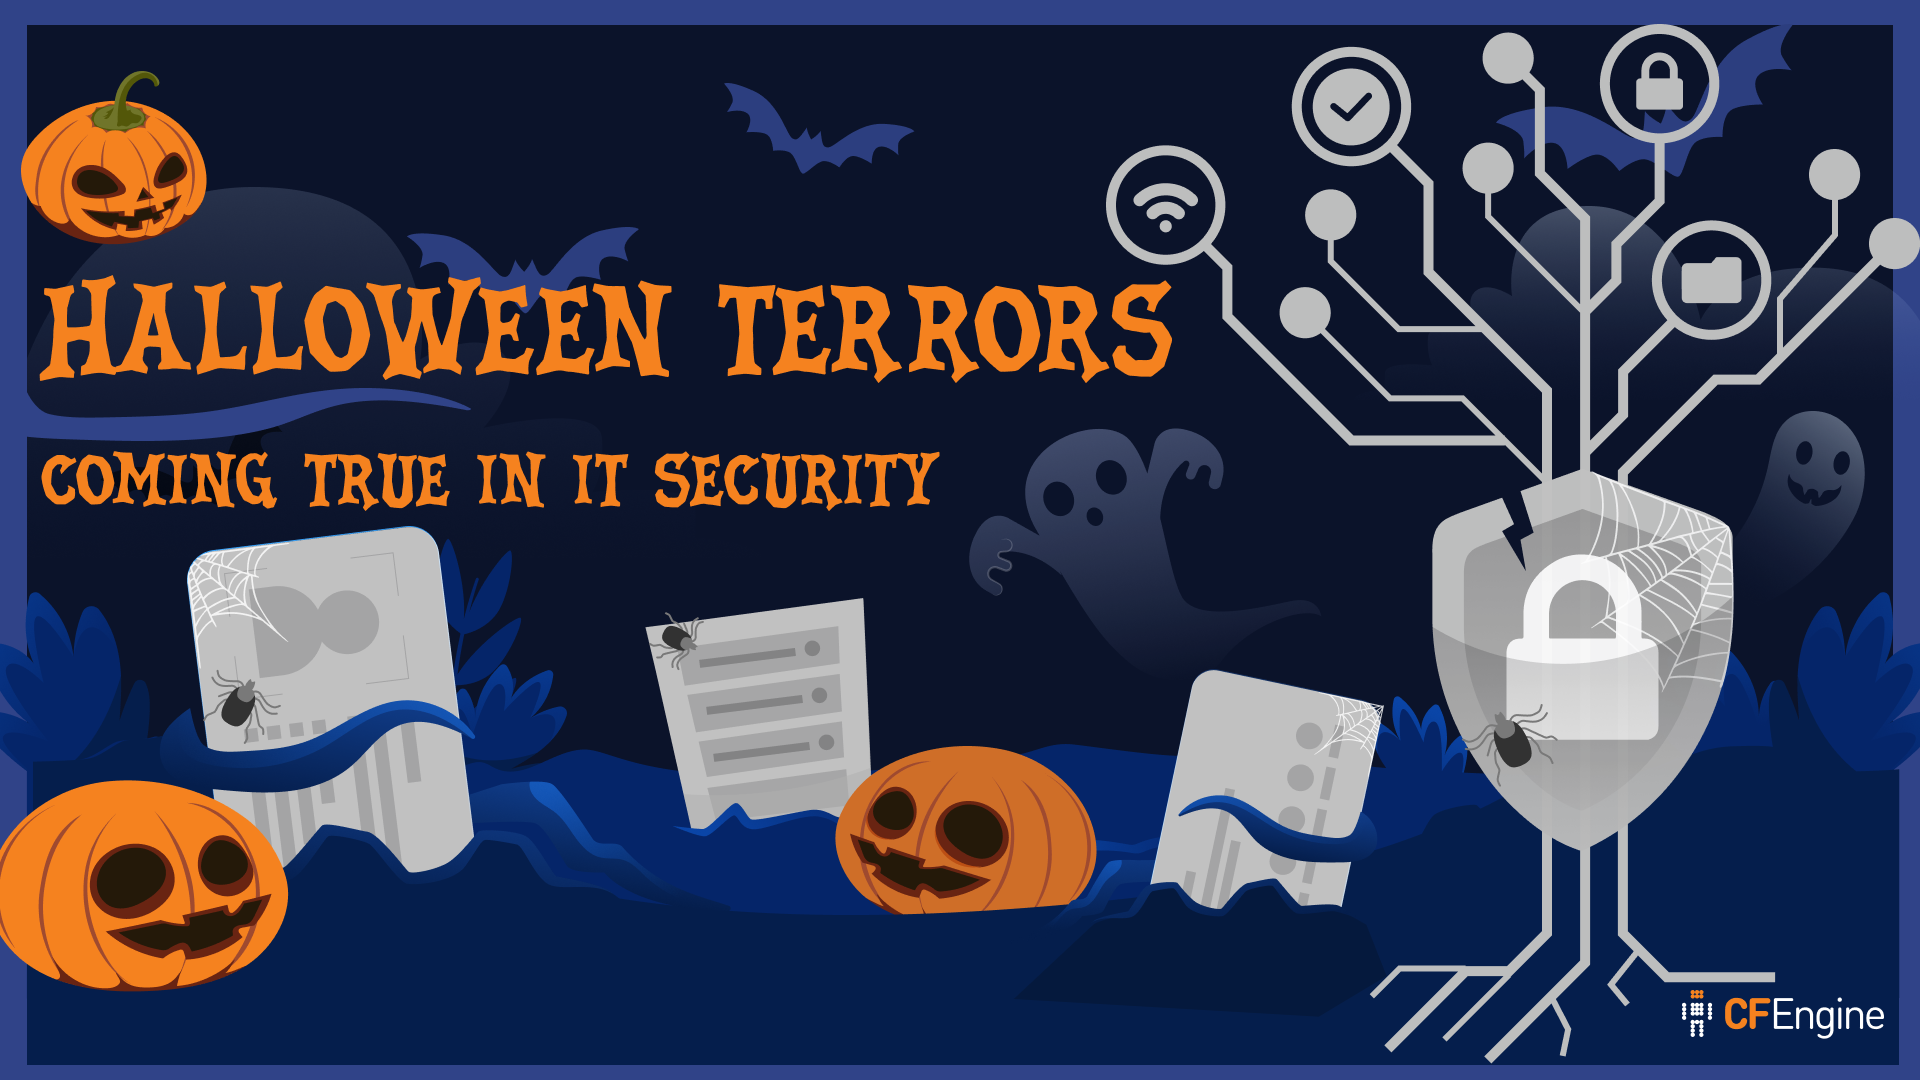 Hallowen terrors coming true in IT security